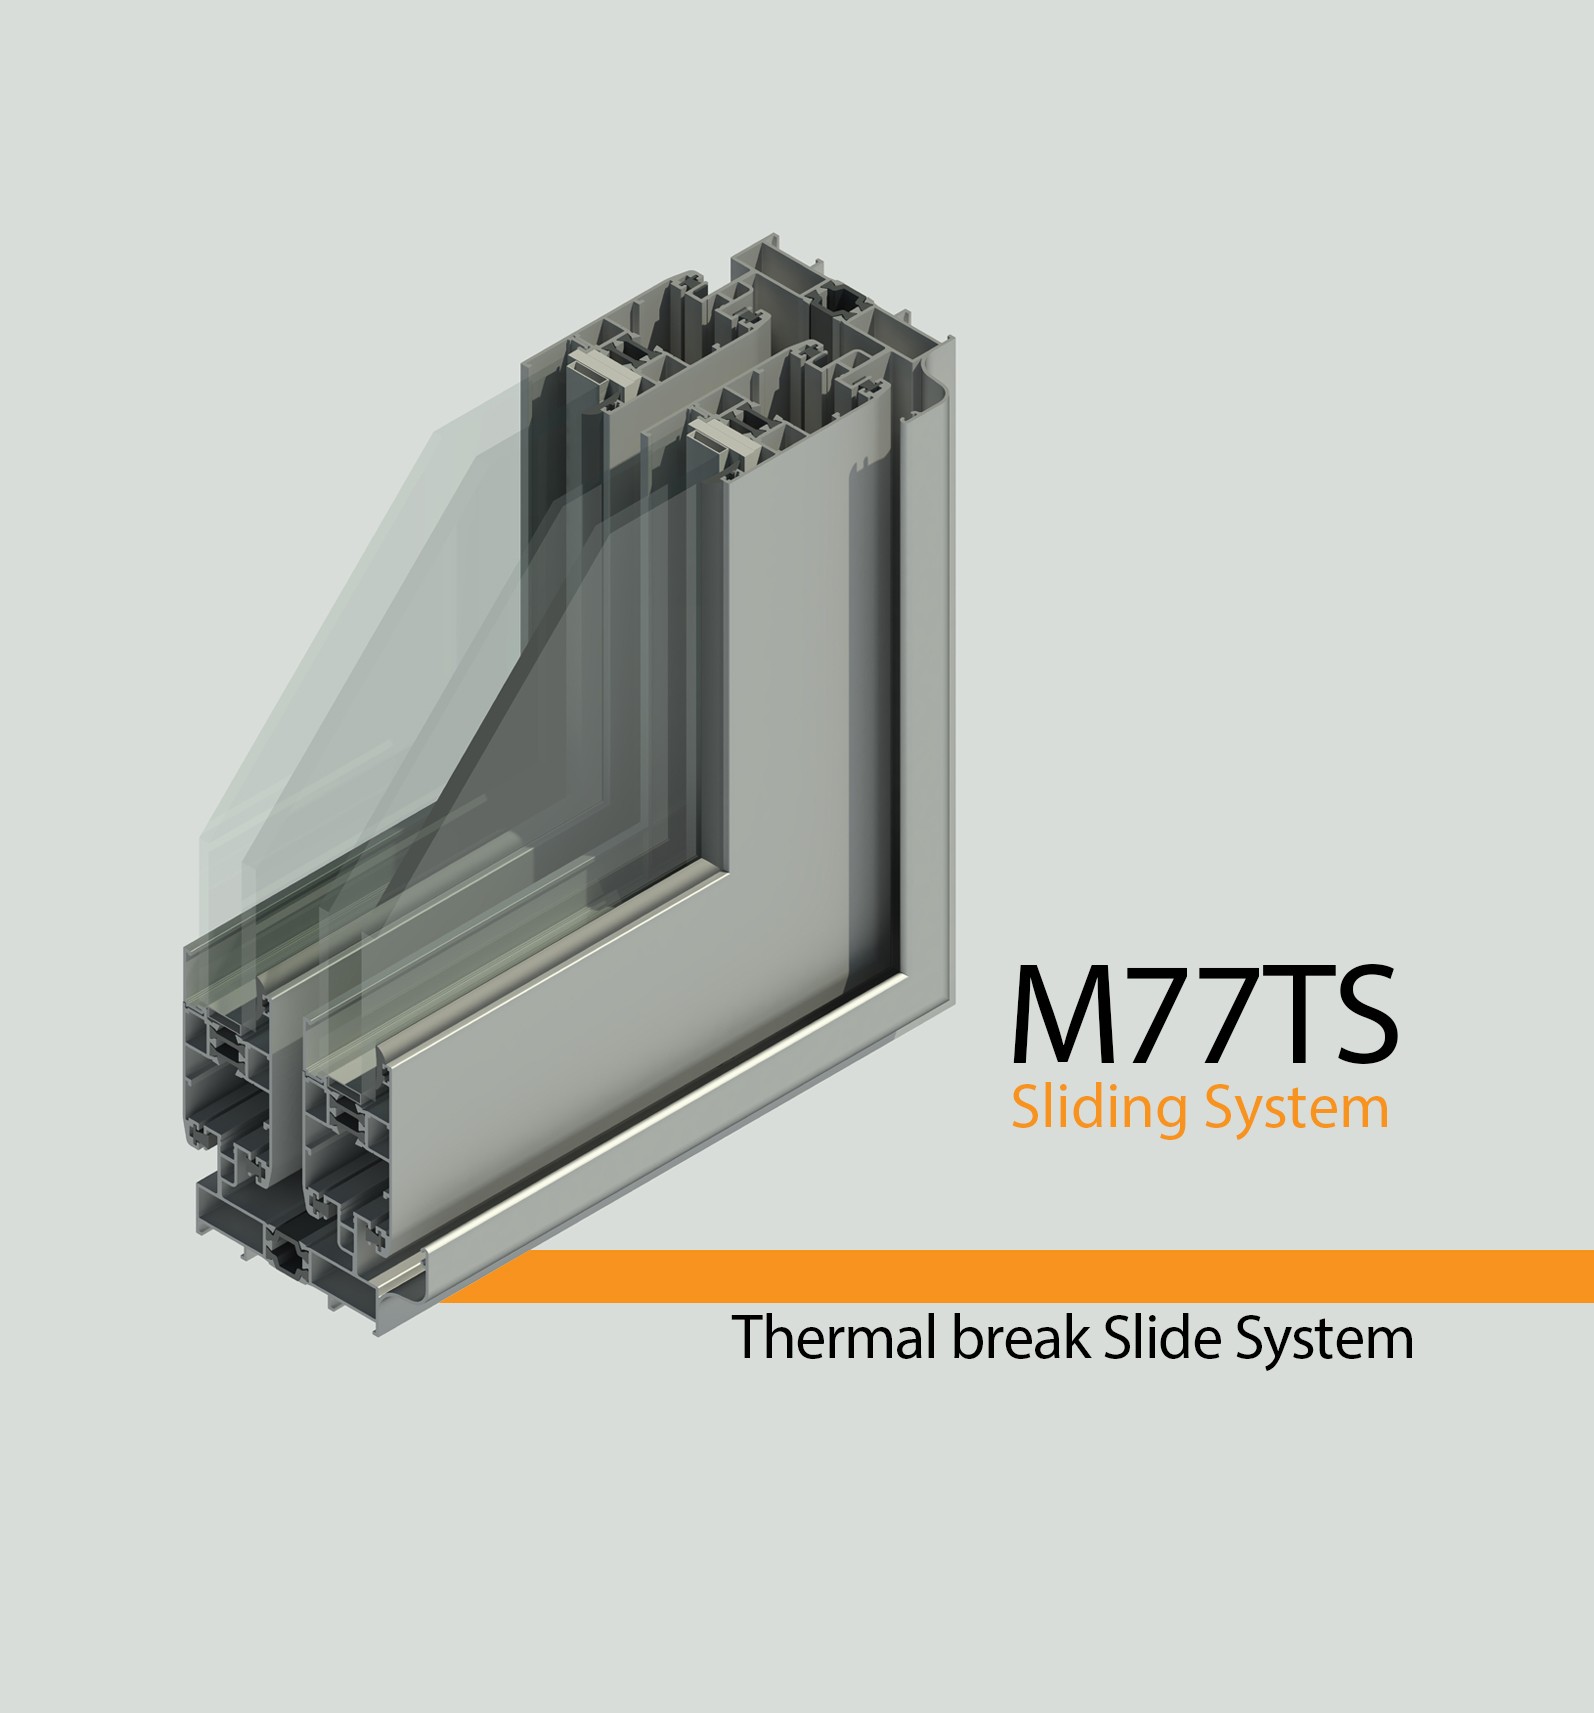 سیستم کشویی ترمال بریک M77